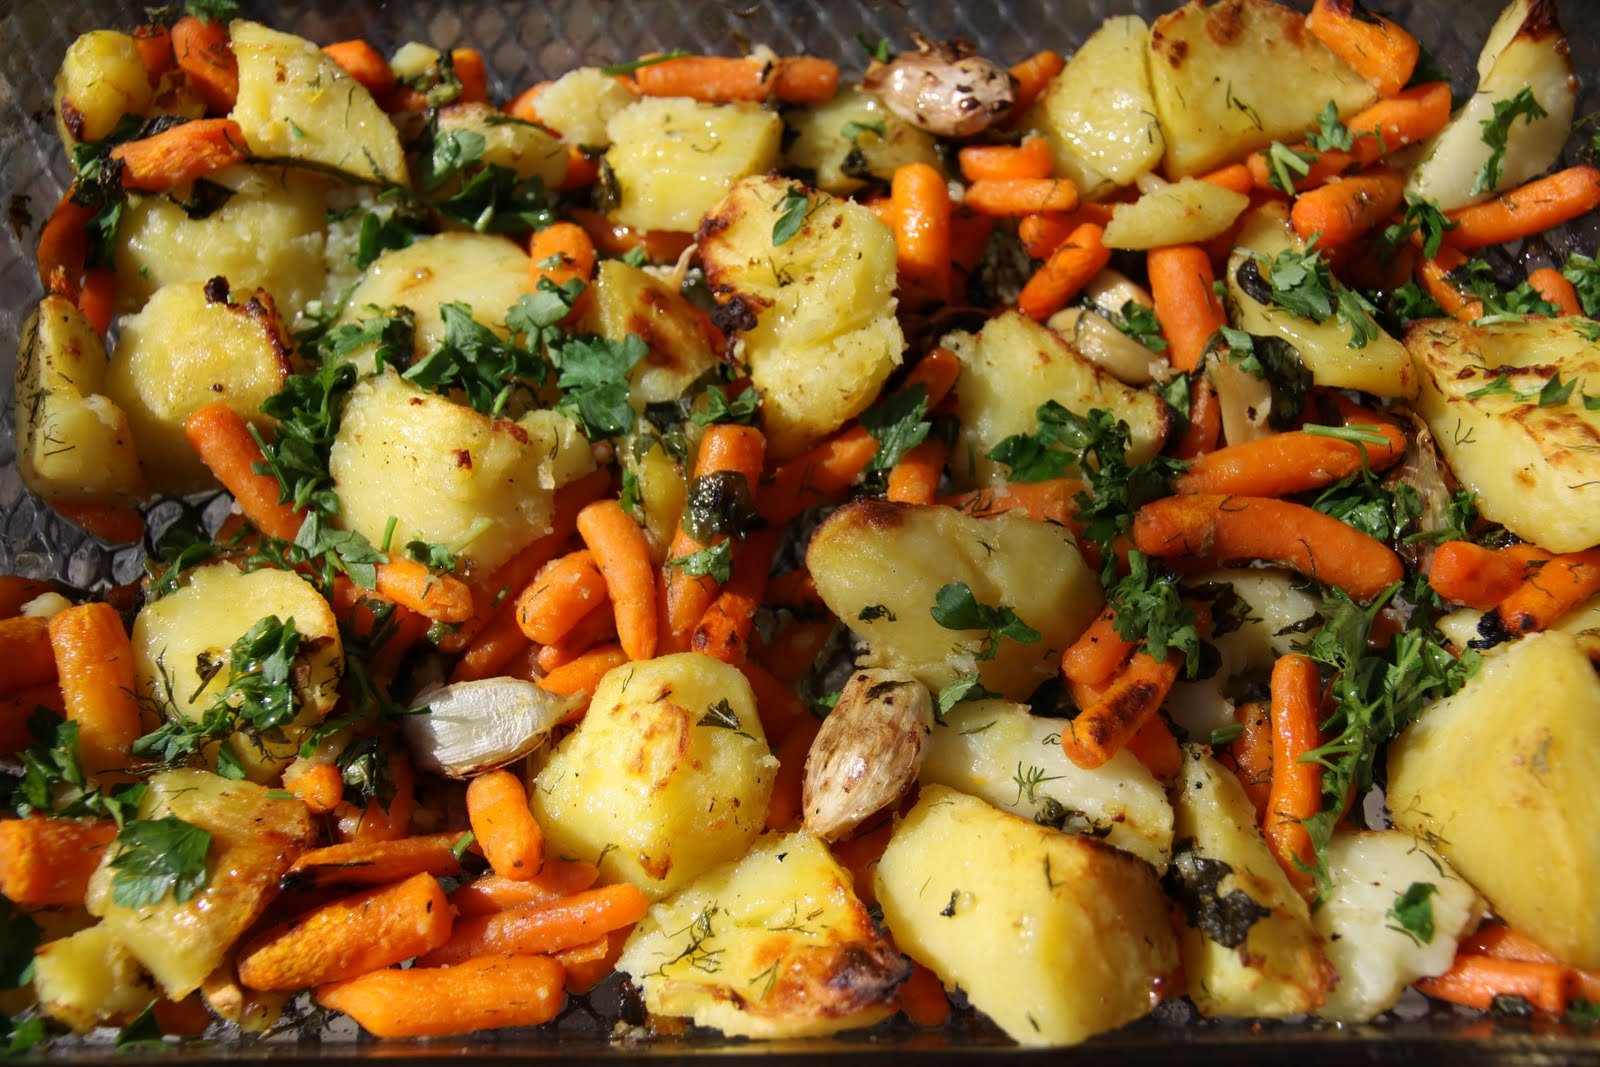 Кабачки картошка морковь лук. Запеченная картошка с овощами. Картофель с овощами в духовке. Запеченная картошка с овощами в духовке. Овощной гарнир.